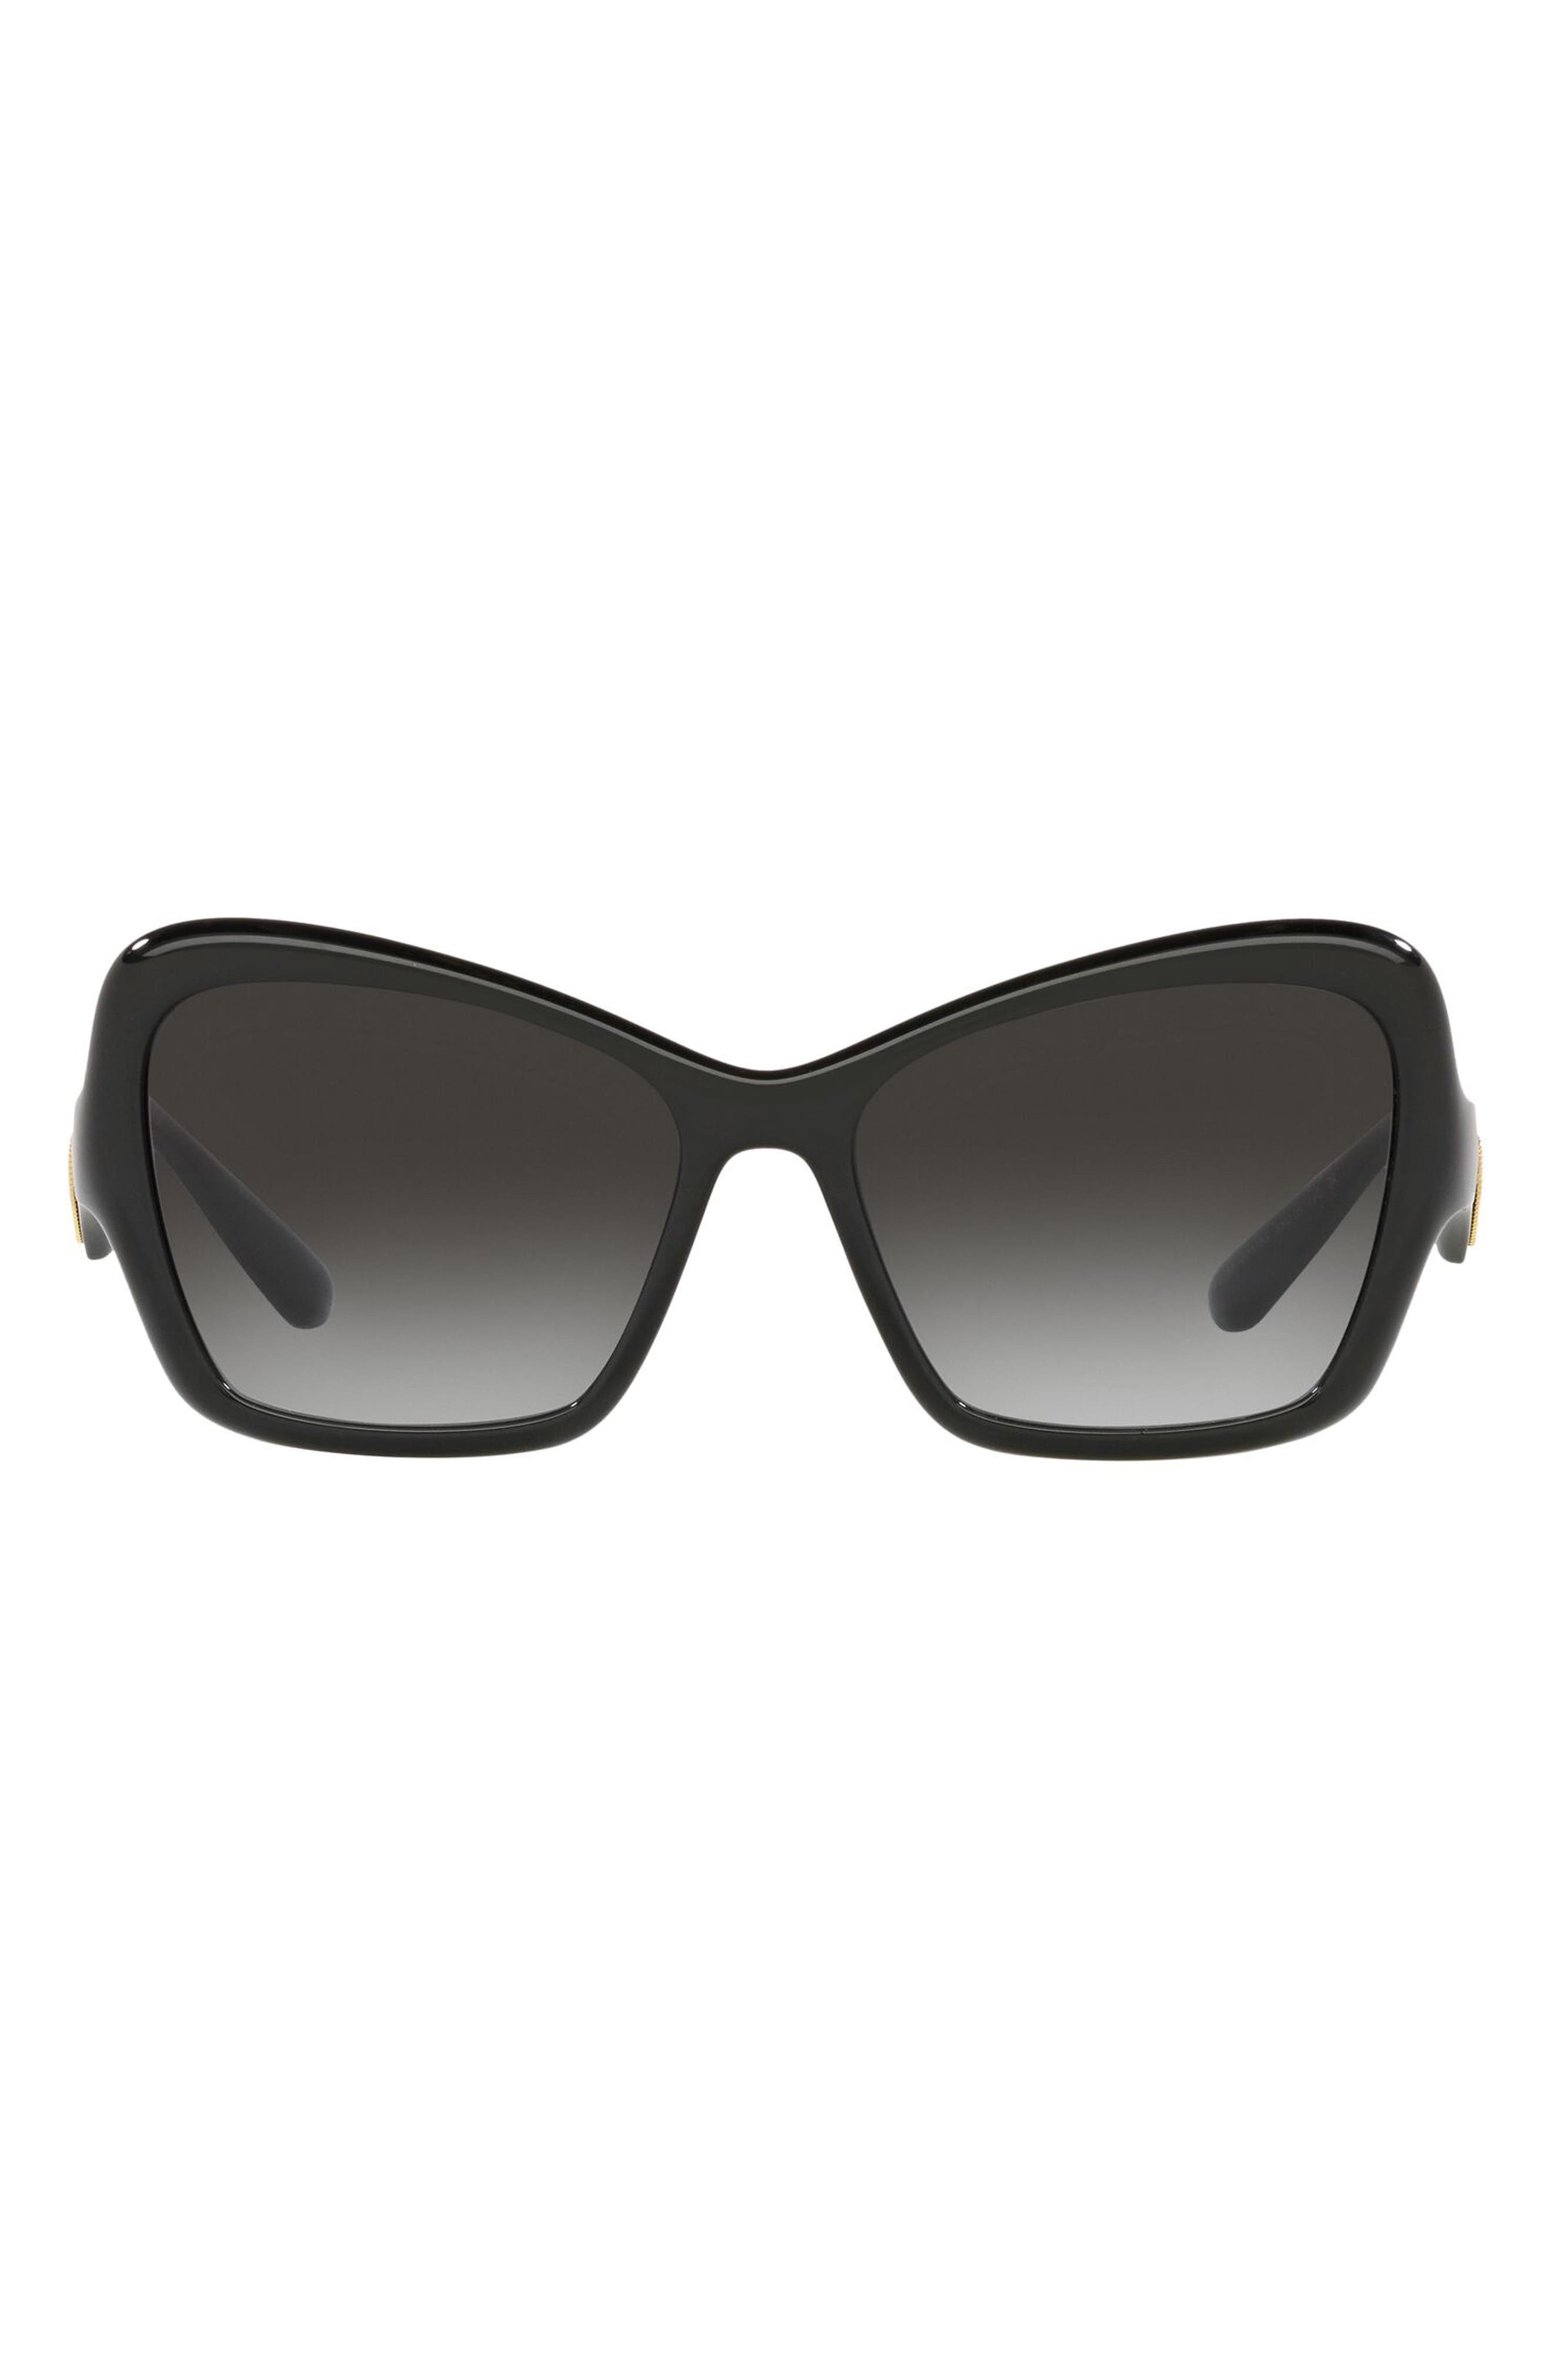 Dolce & Gabbana 55mm Gradient Geometric Sunglasses in Black at Nordstrom